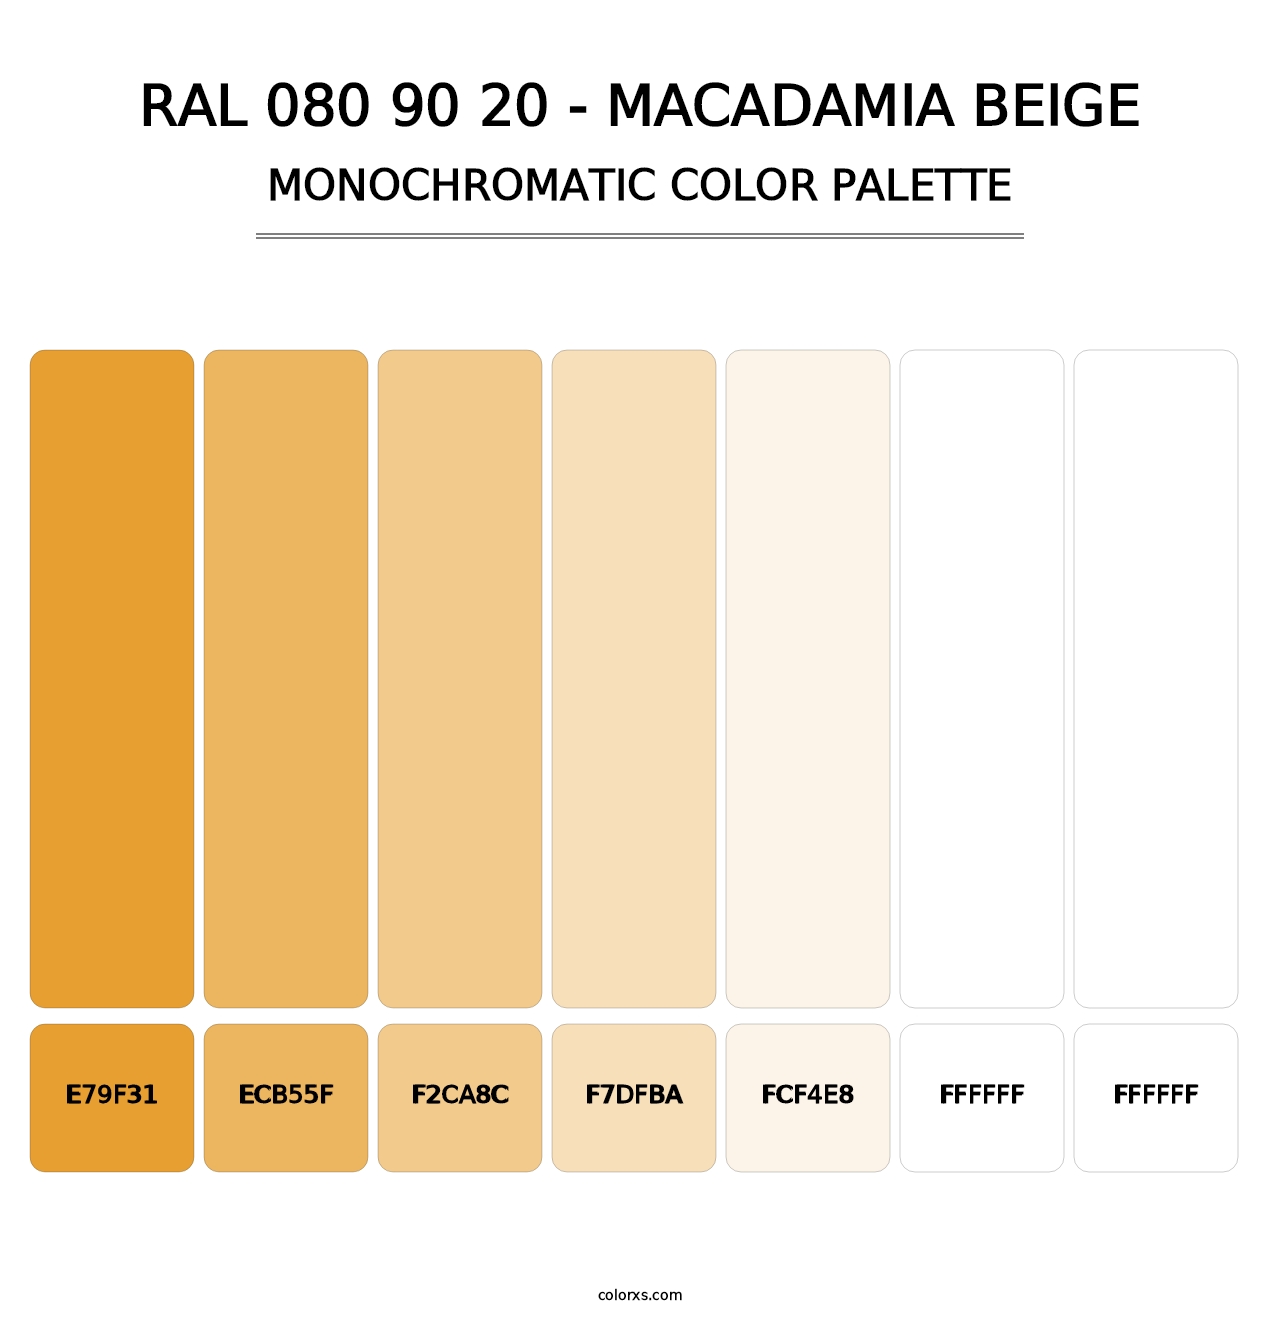 RAL 080 90 20 - Macadamia Beige - Monochromatic Color Palette